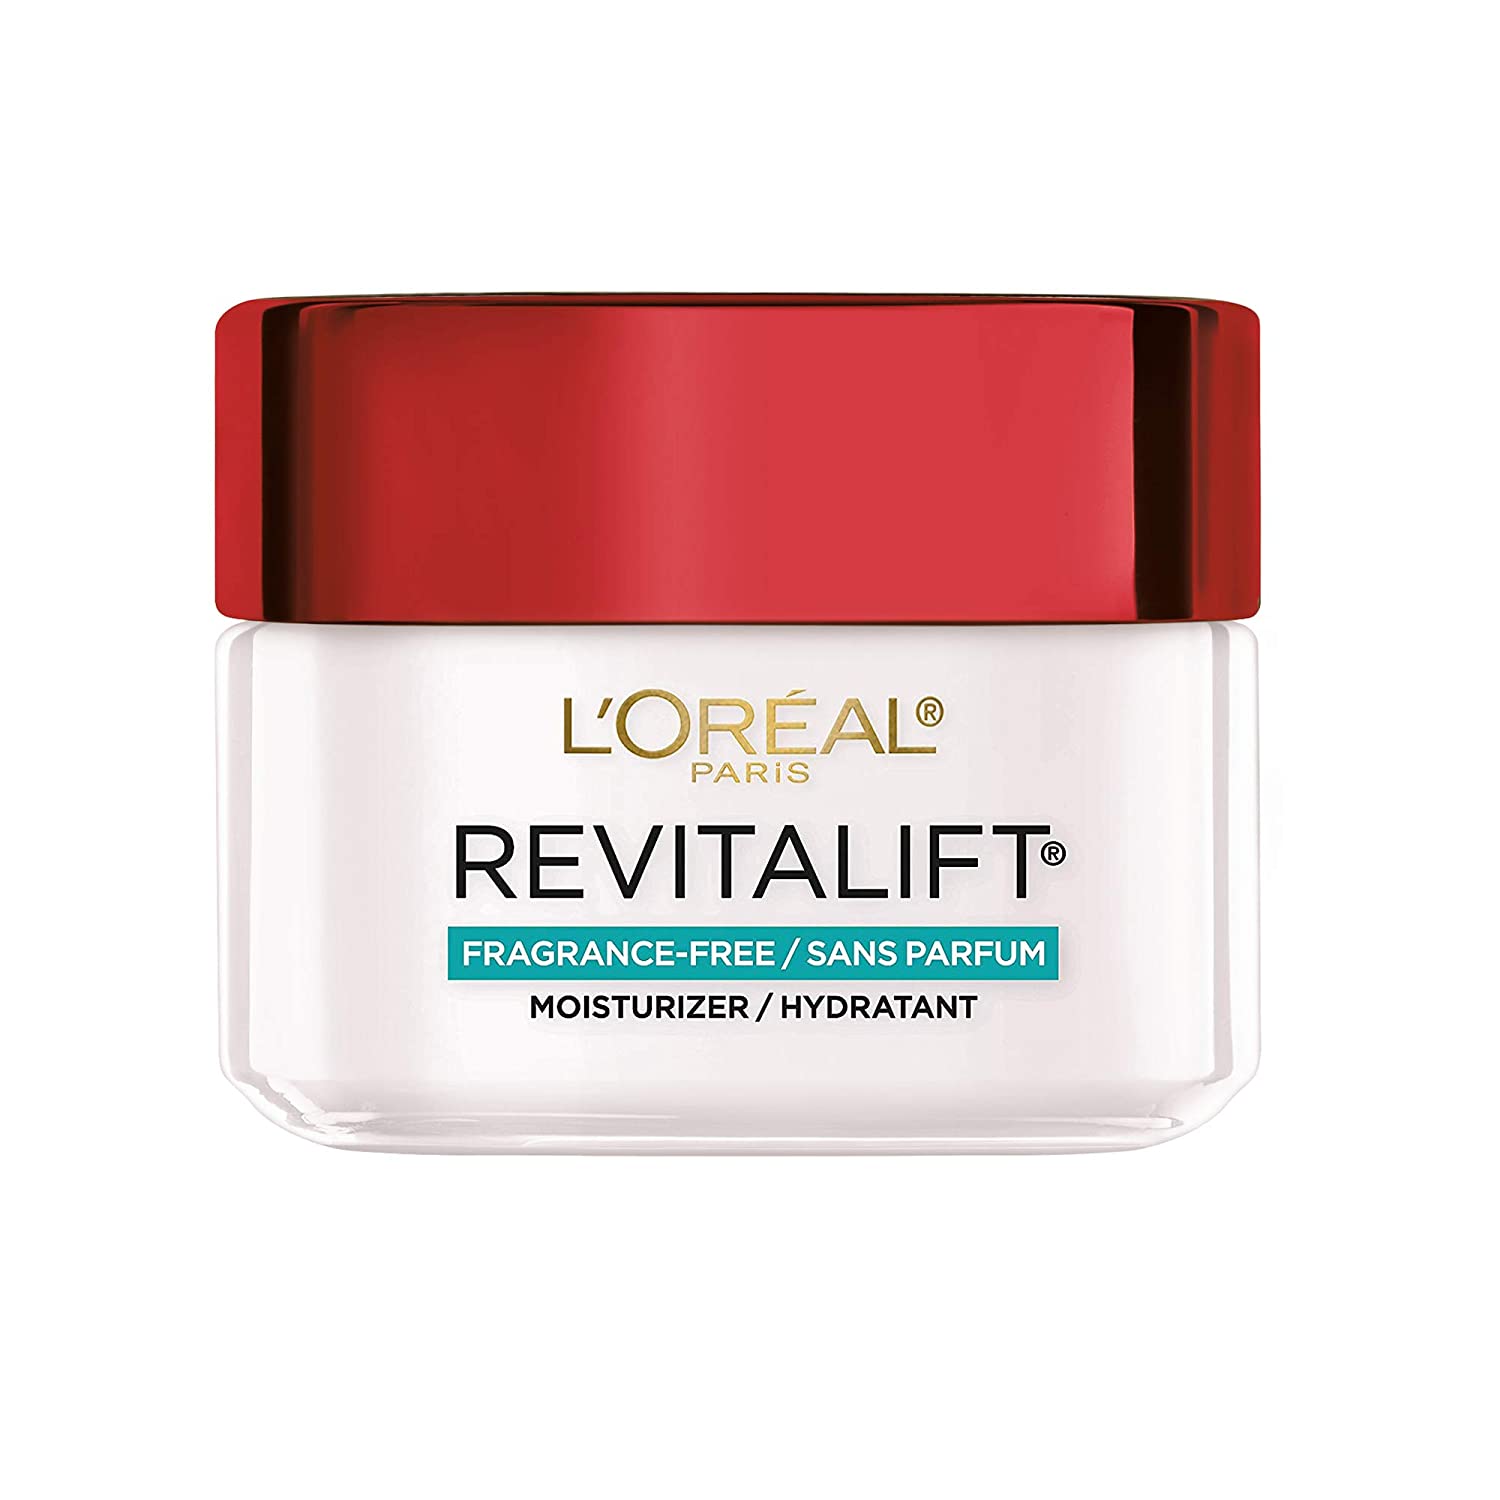 L'Oreal Paris Revitalift Anti Wrinkle and Firming Anti-Aging Cream Fragrance Free, 1.7 oz